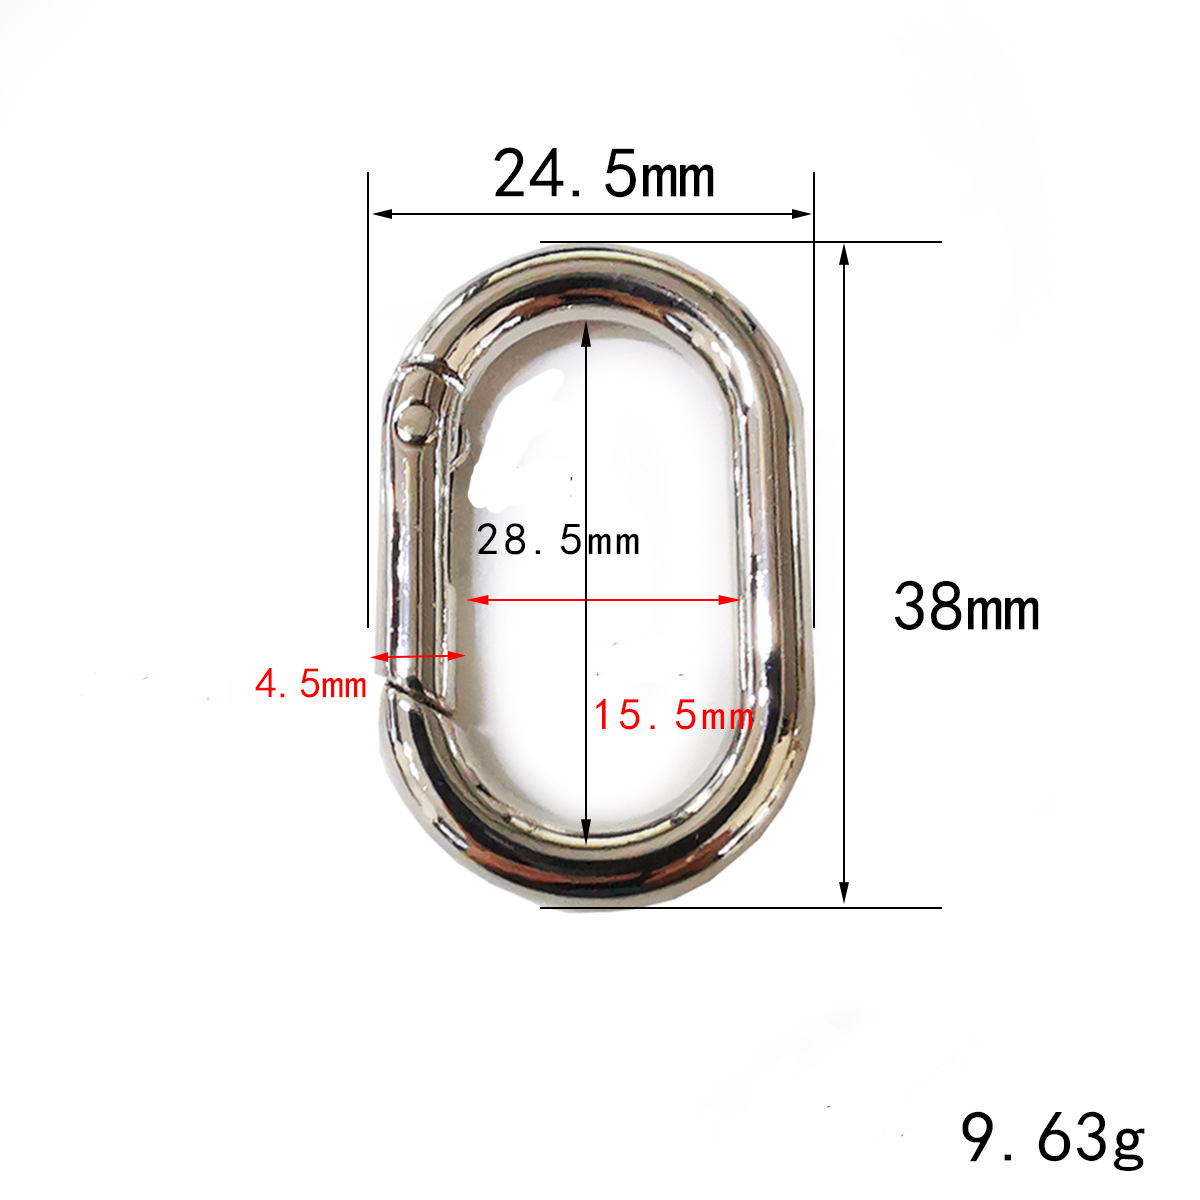 3:Inside diameter 28.5 mm oval spring buckle